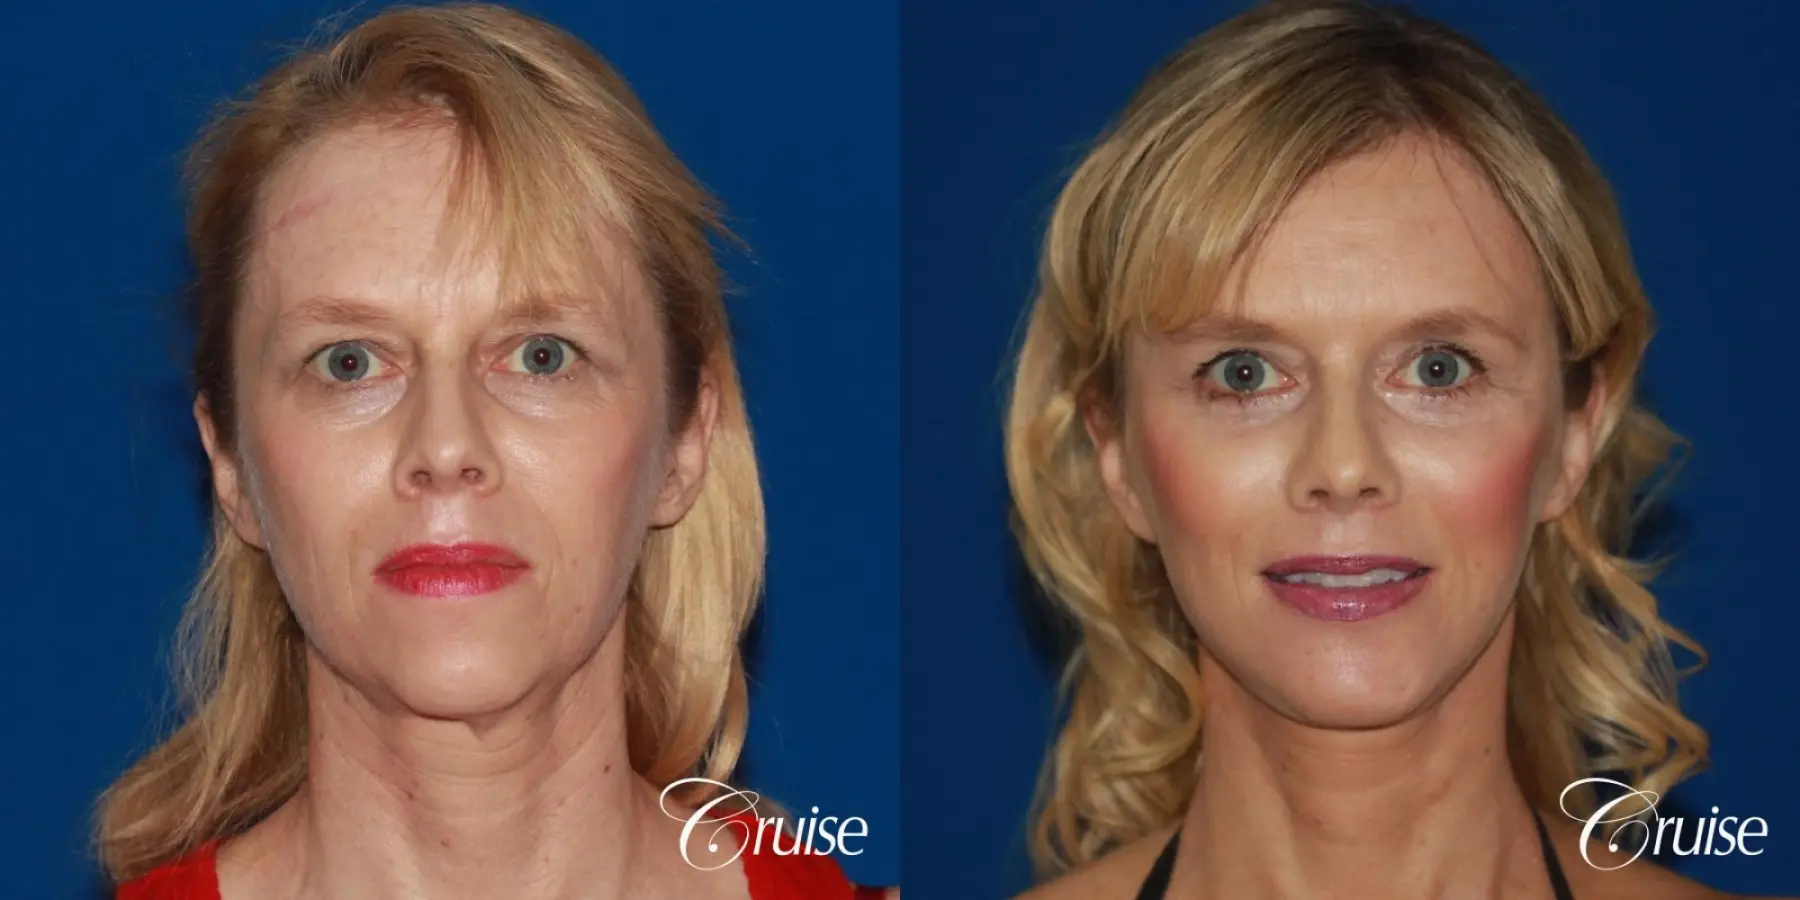 facial rejuvenation newport beach ca - Before and After 4